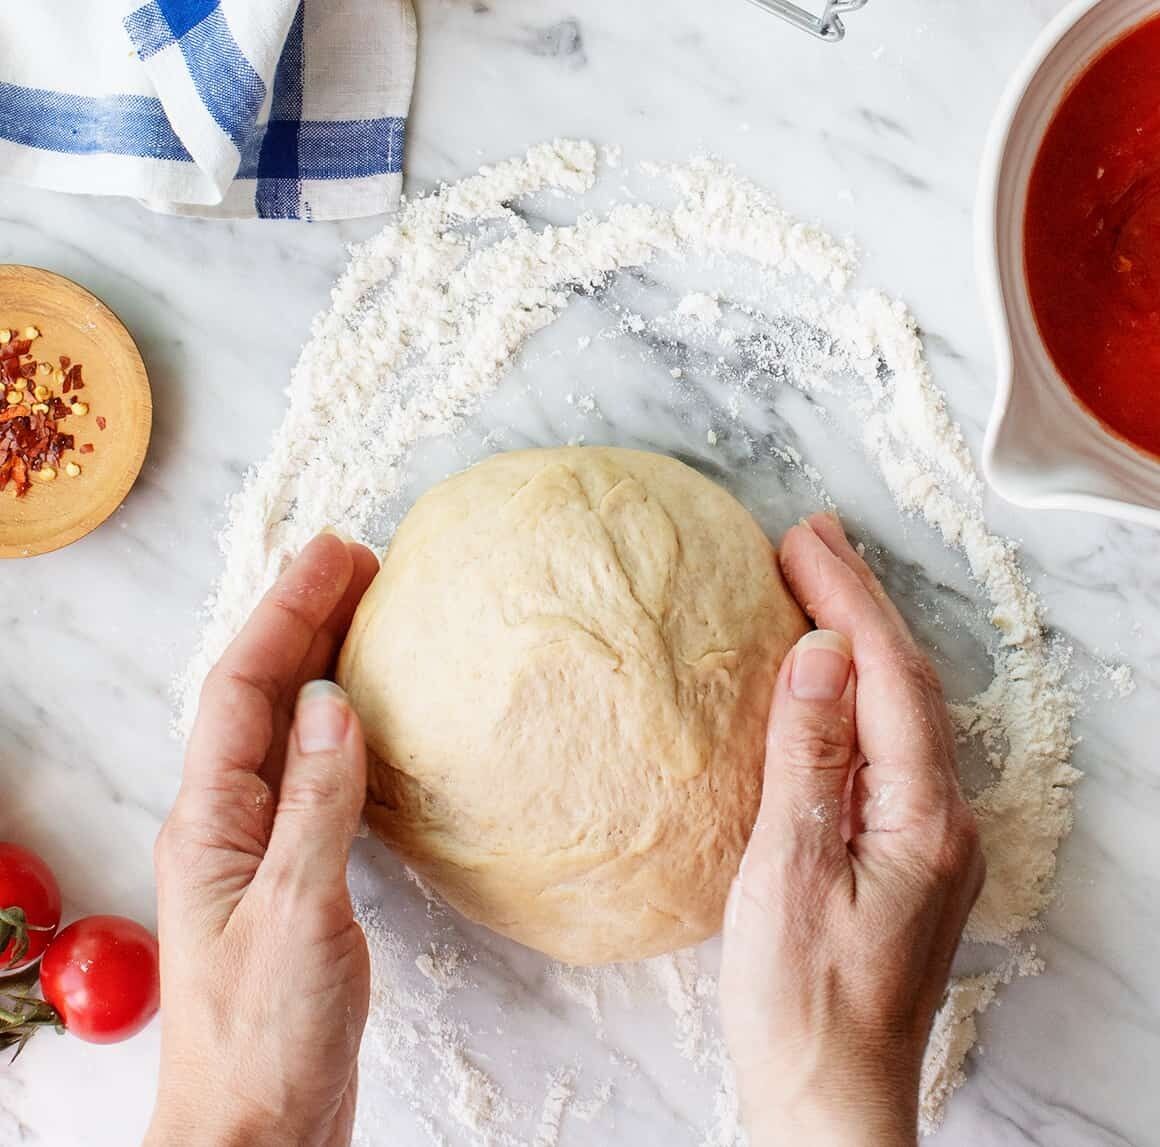 All-purpose yeast dough